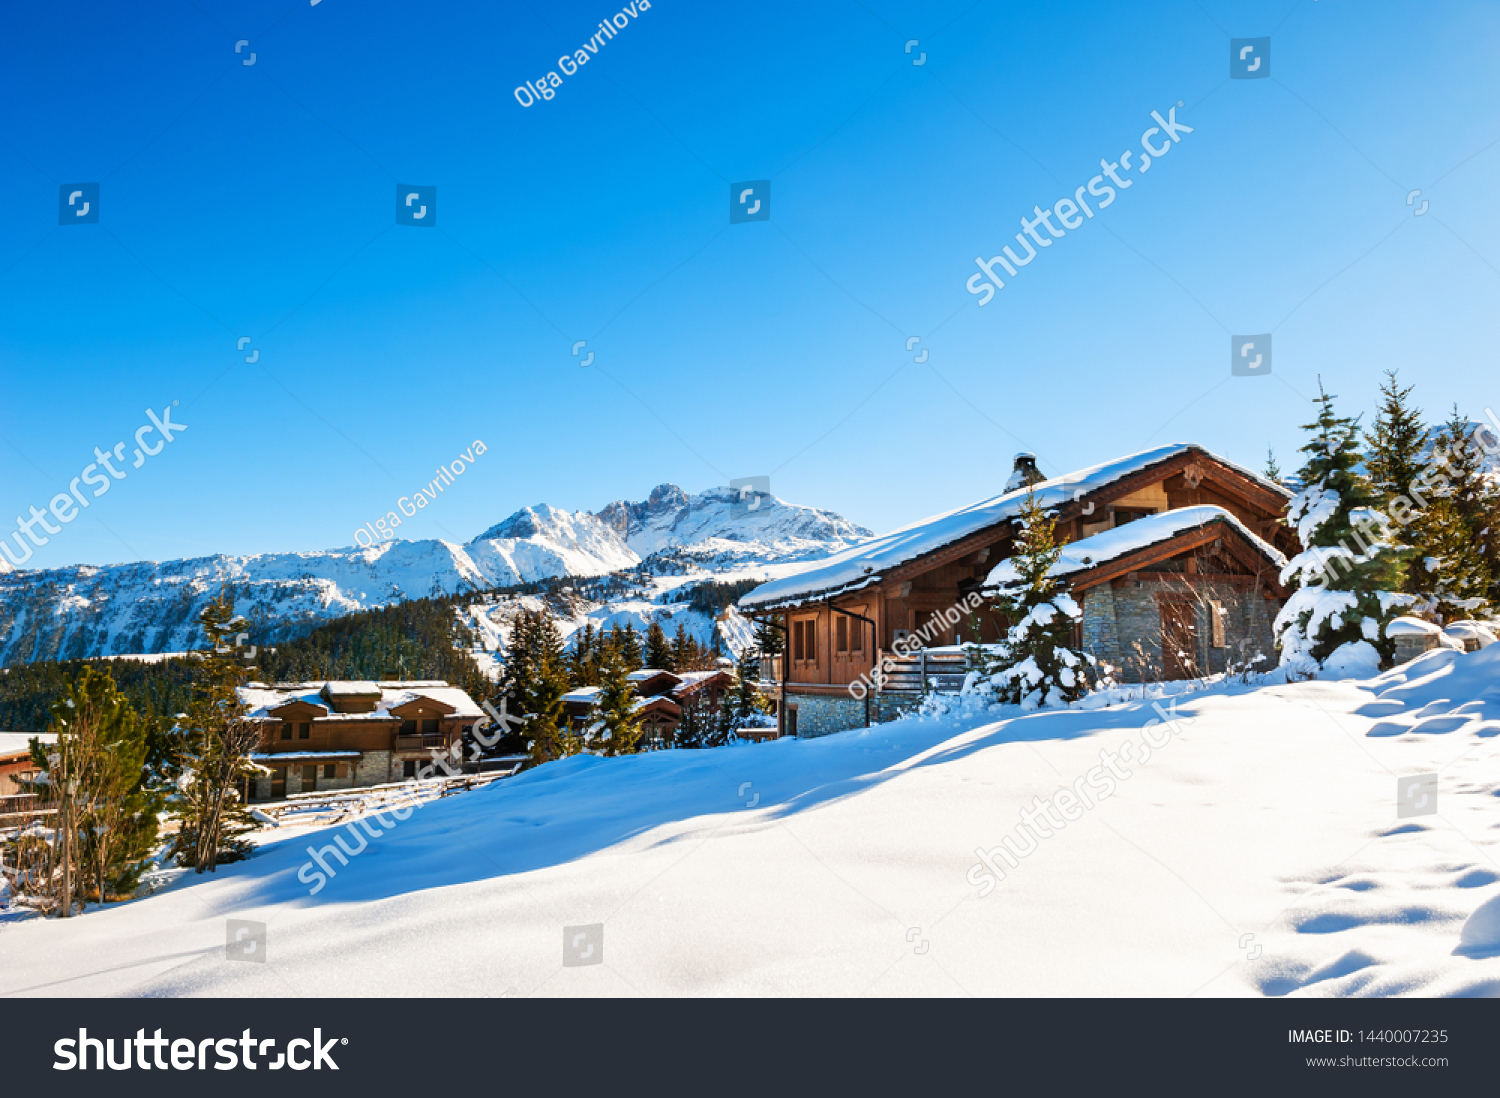 Courchevel village in Alps mountains, France. Winter ski resort. Famous travel destination #1440007235